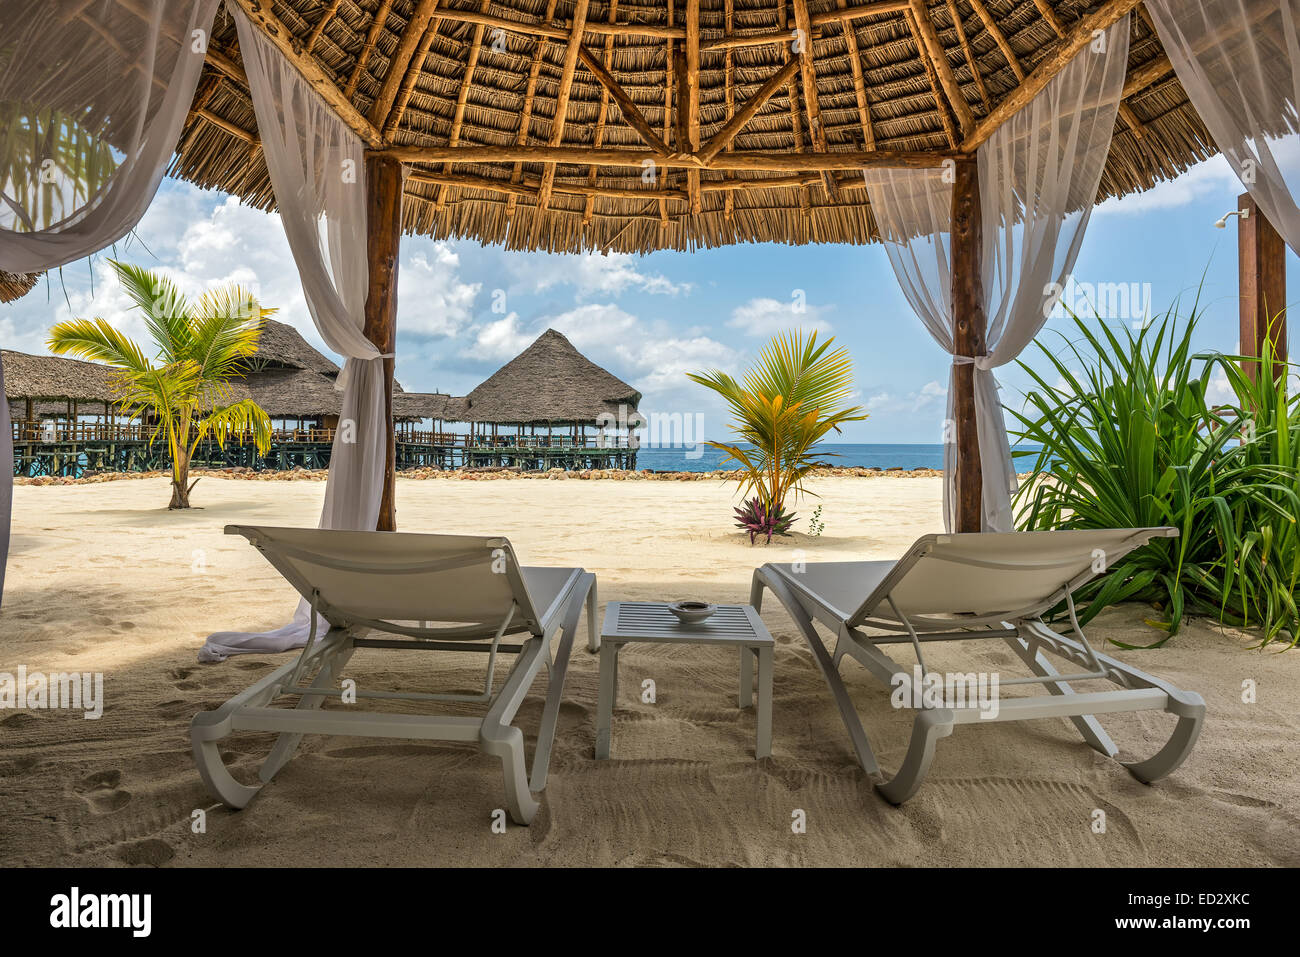 Beach lounge chairs and a beach bar at the shore of Indian ocean, Zanzibar, Tanzania Stock Photo